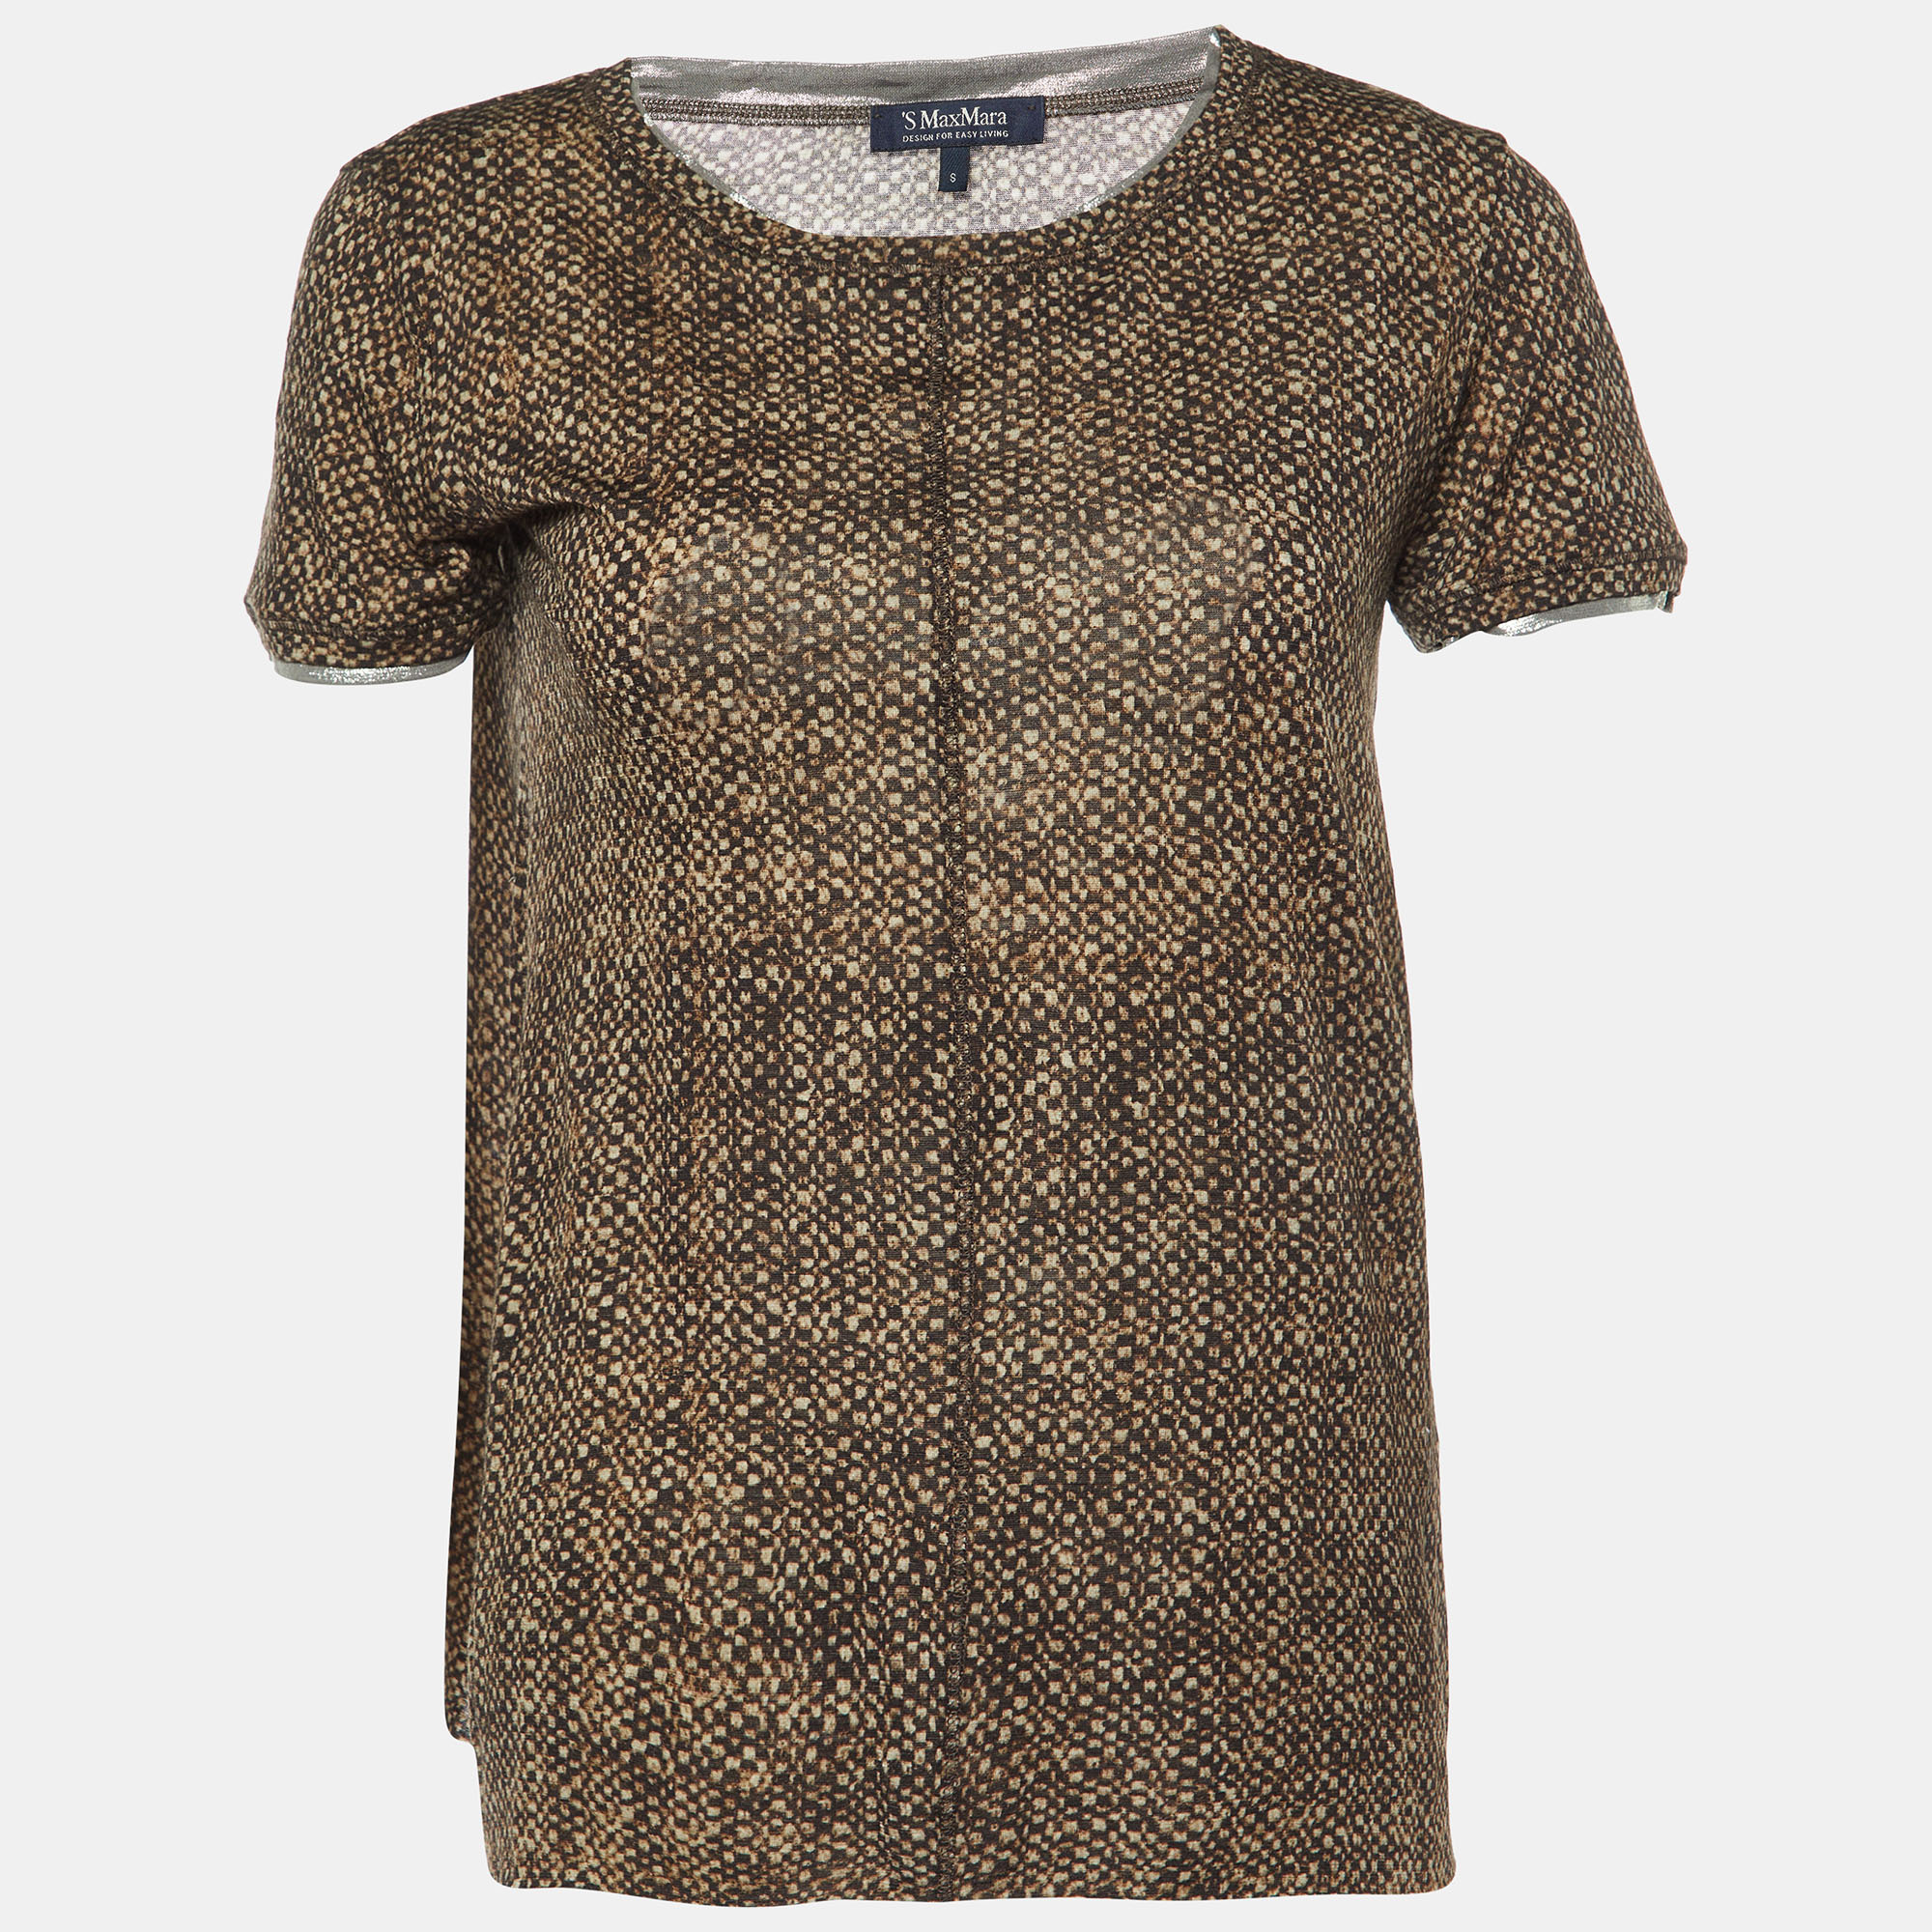 

S'Max Mara Brown Snake Print Wool Blend Knit T-Shirt S